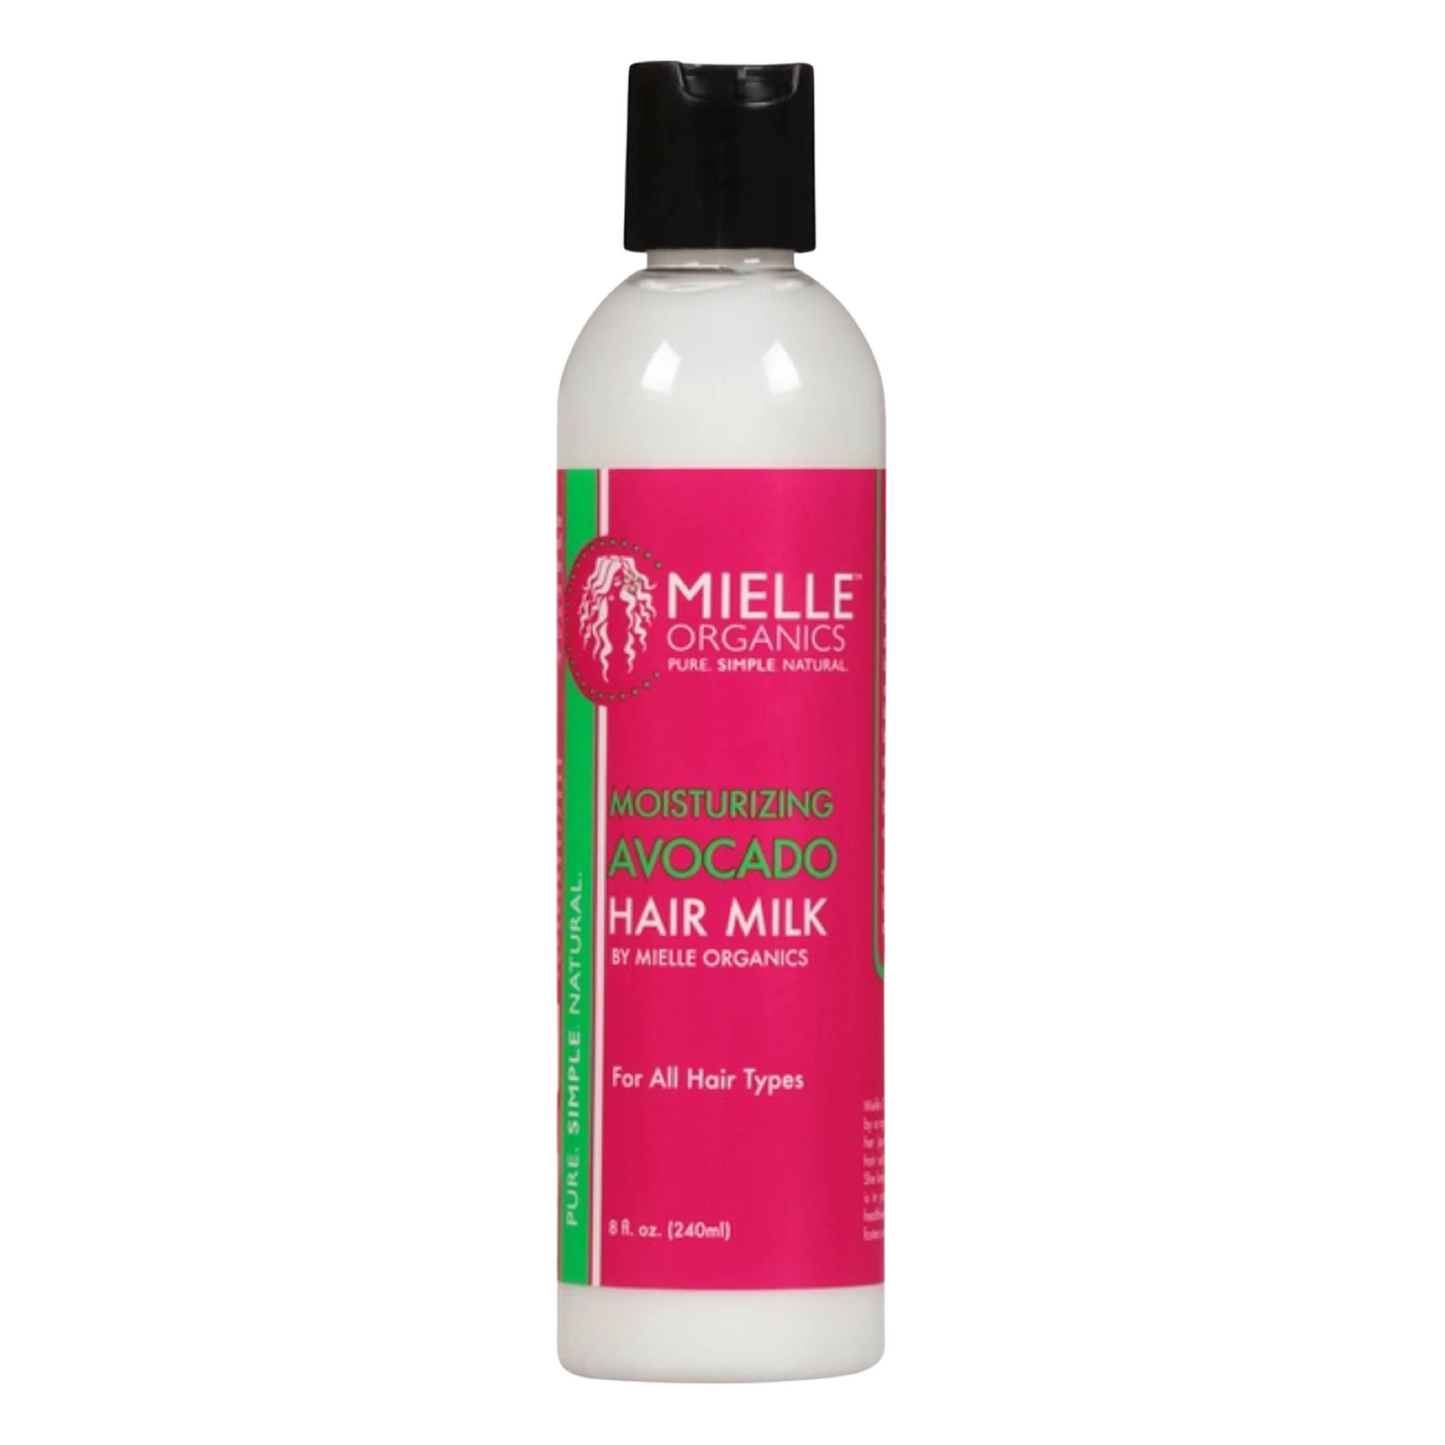 Mielle Organics - Moisturising Avocado Hair Milk - 8 Oz